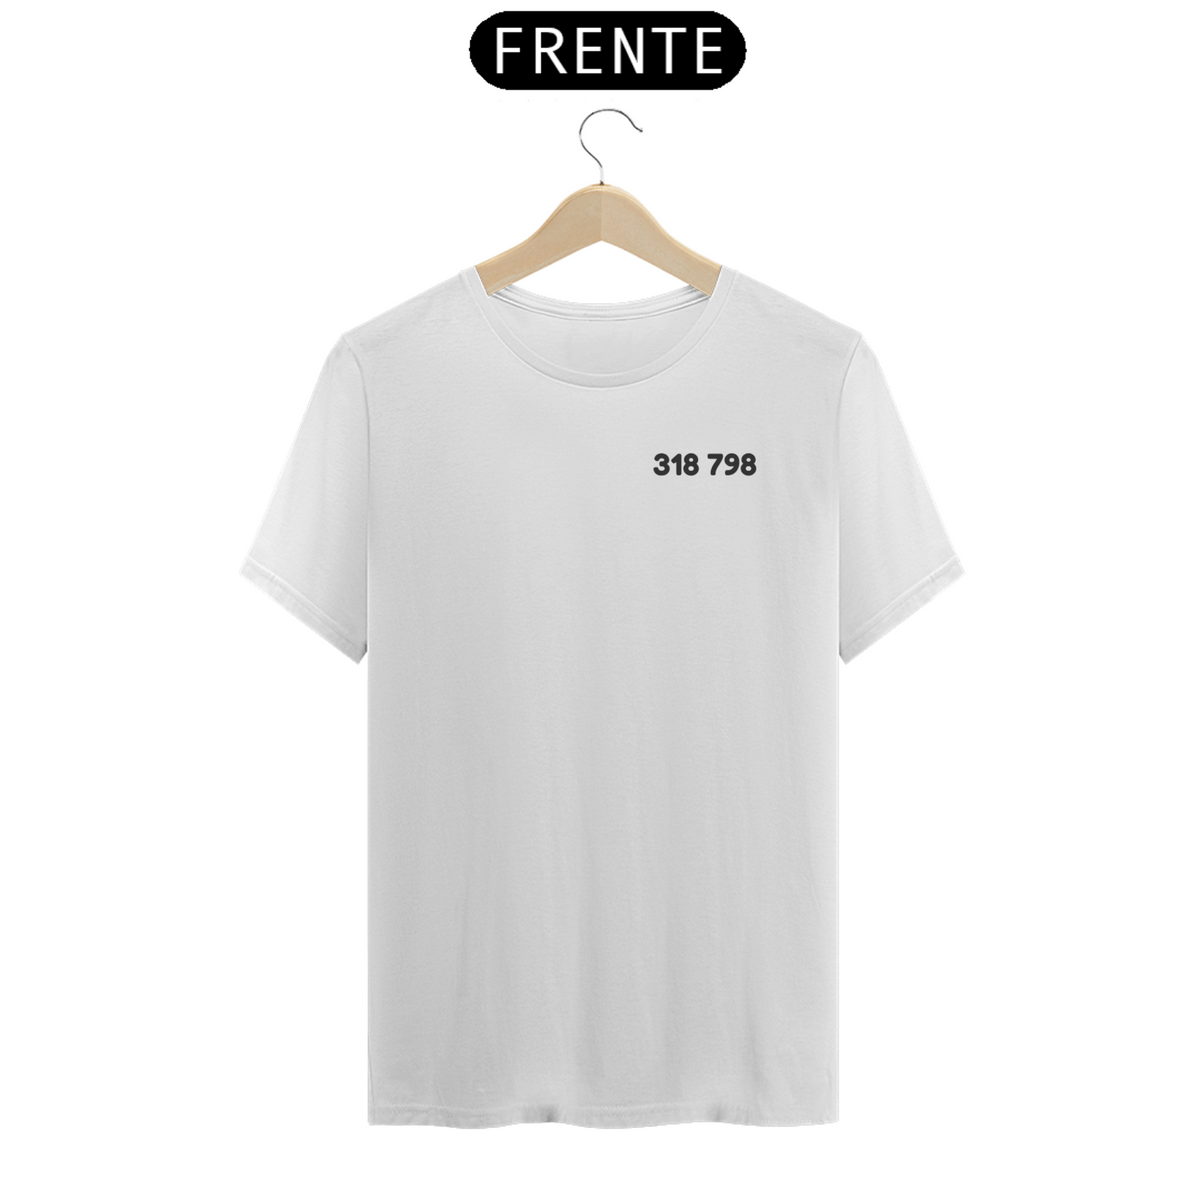 Nome do produto: Camiseta T-Shirt Prime - Códigos Grabovoi: 318 798 - Abundância Financeira